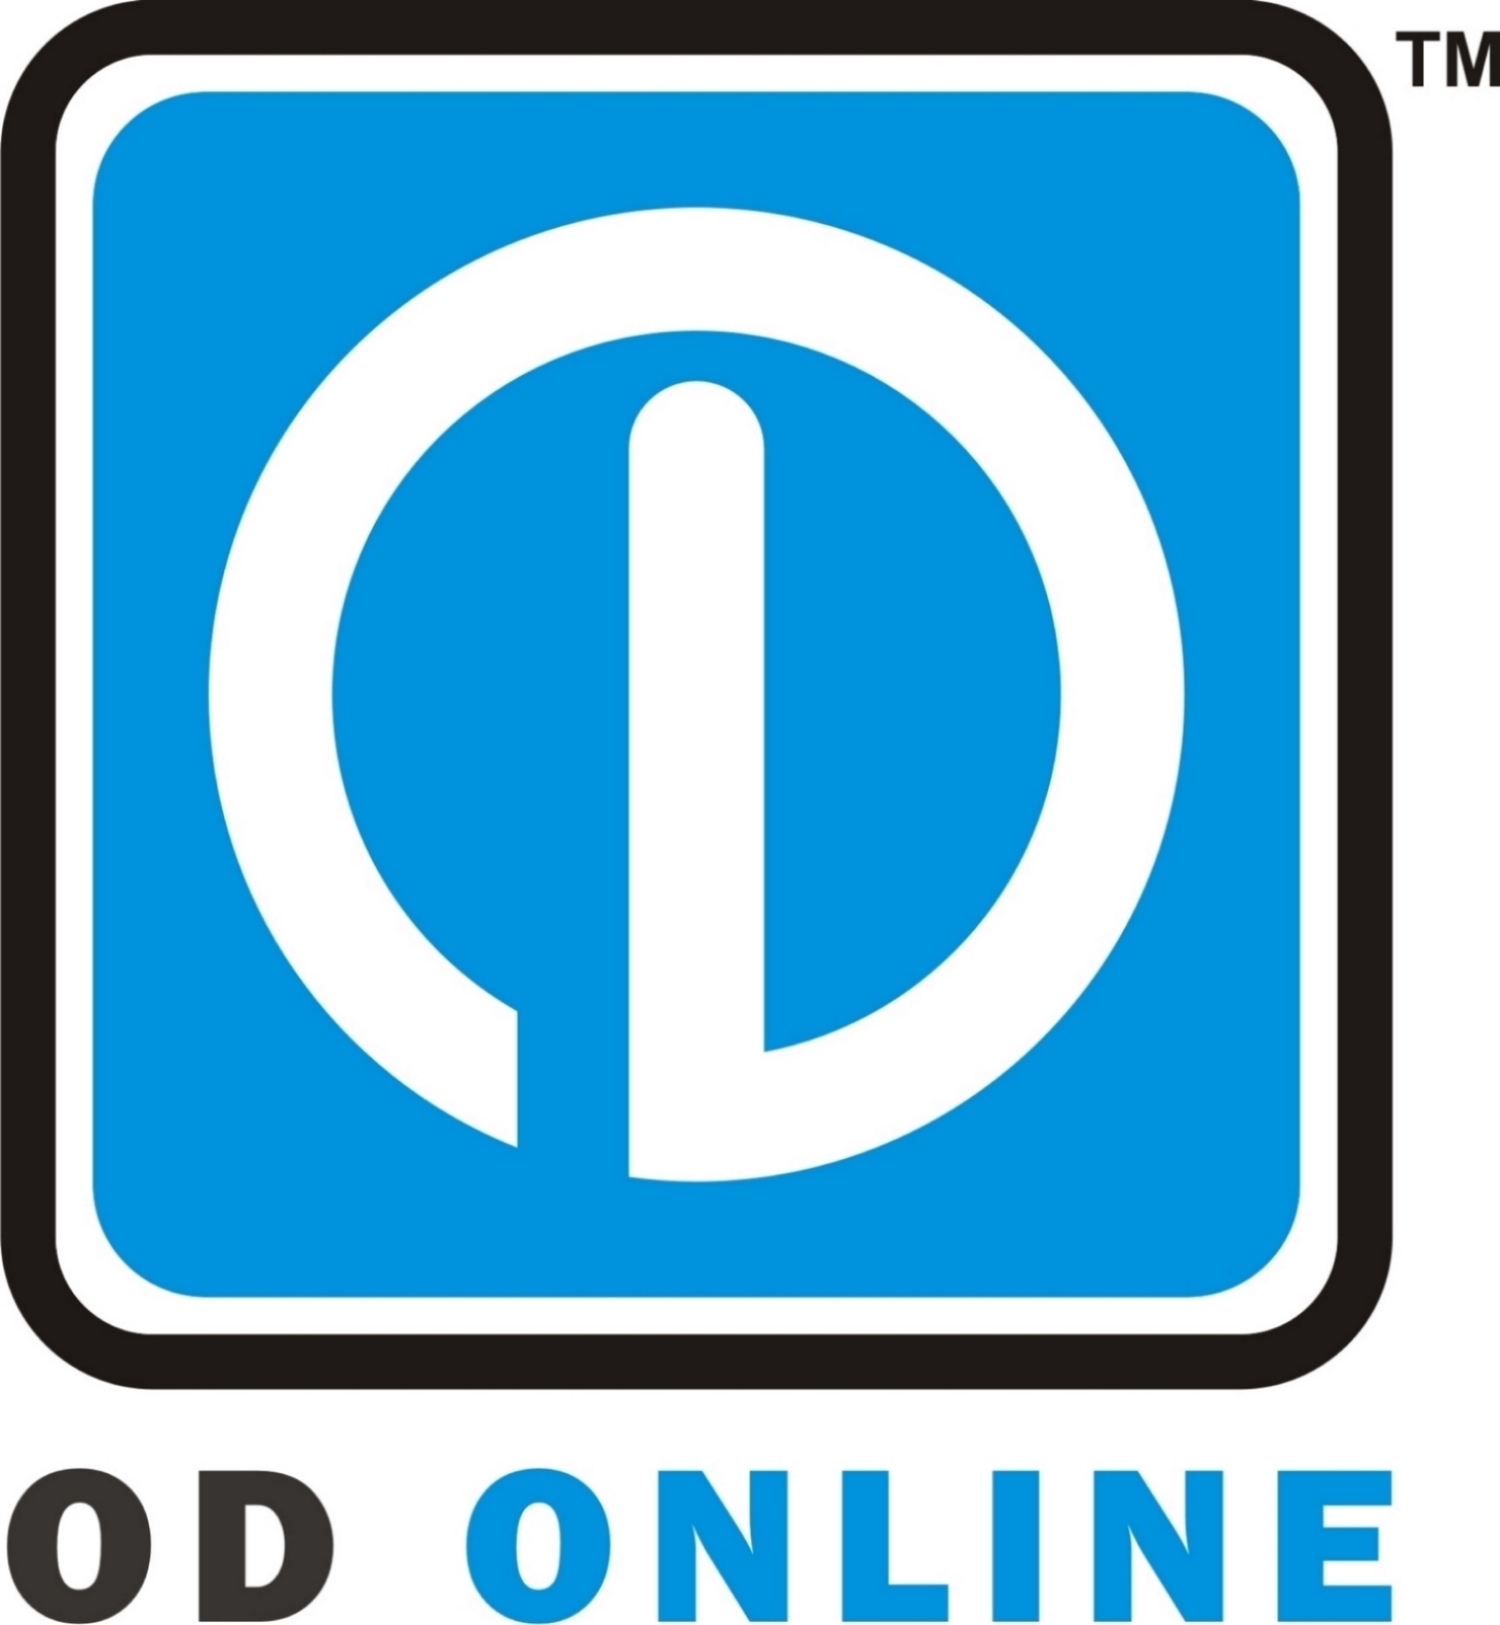 OD Online